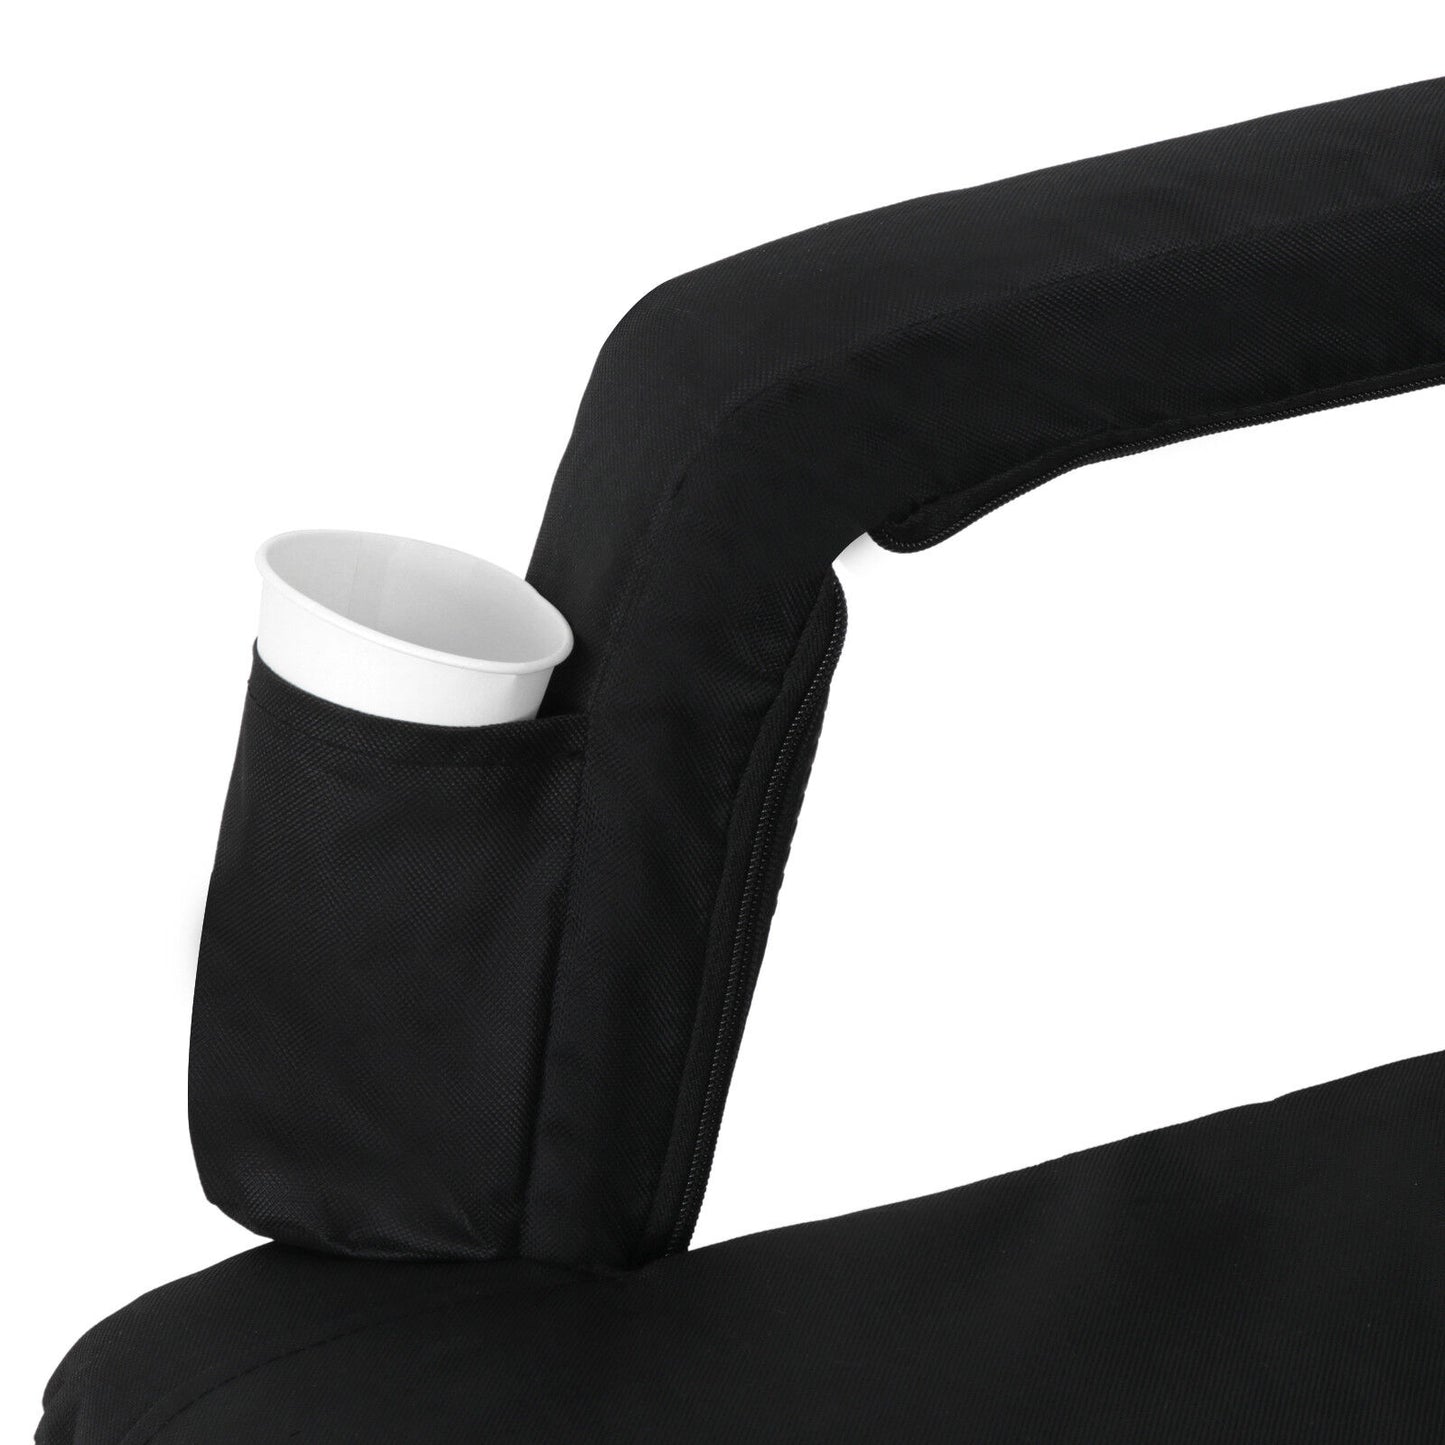 Ergonomics Stadium Seats Chairs For Bleachers 5 Reclining Positions Black